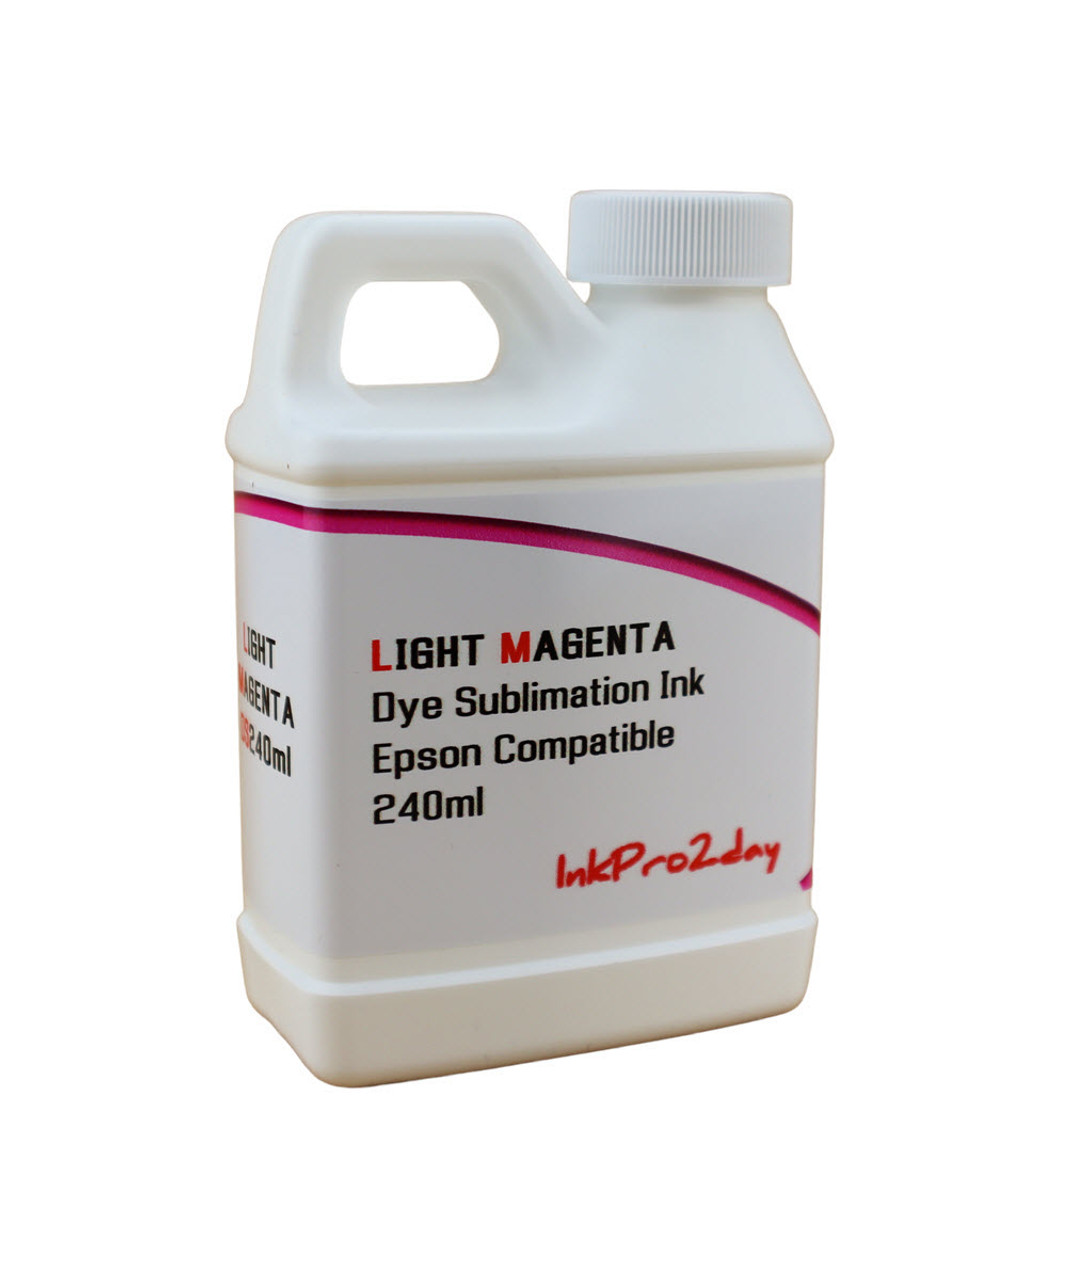 Light Magenta 240ml Bottle Dye Sublimation Ink for Epson Stylus Pro 4800 printers